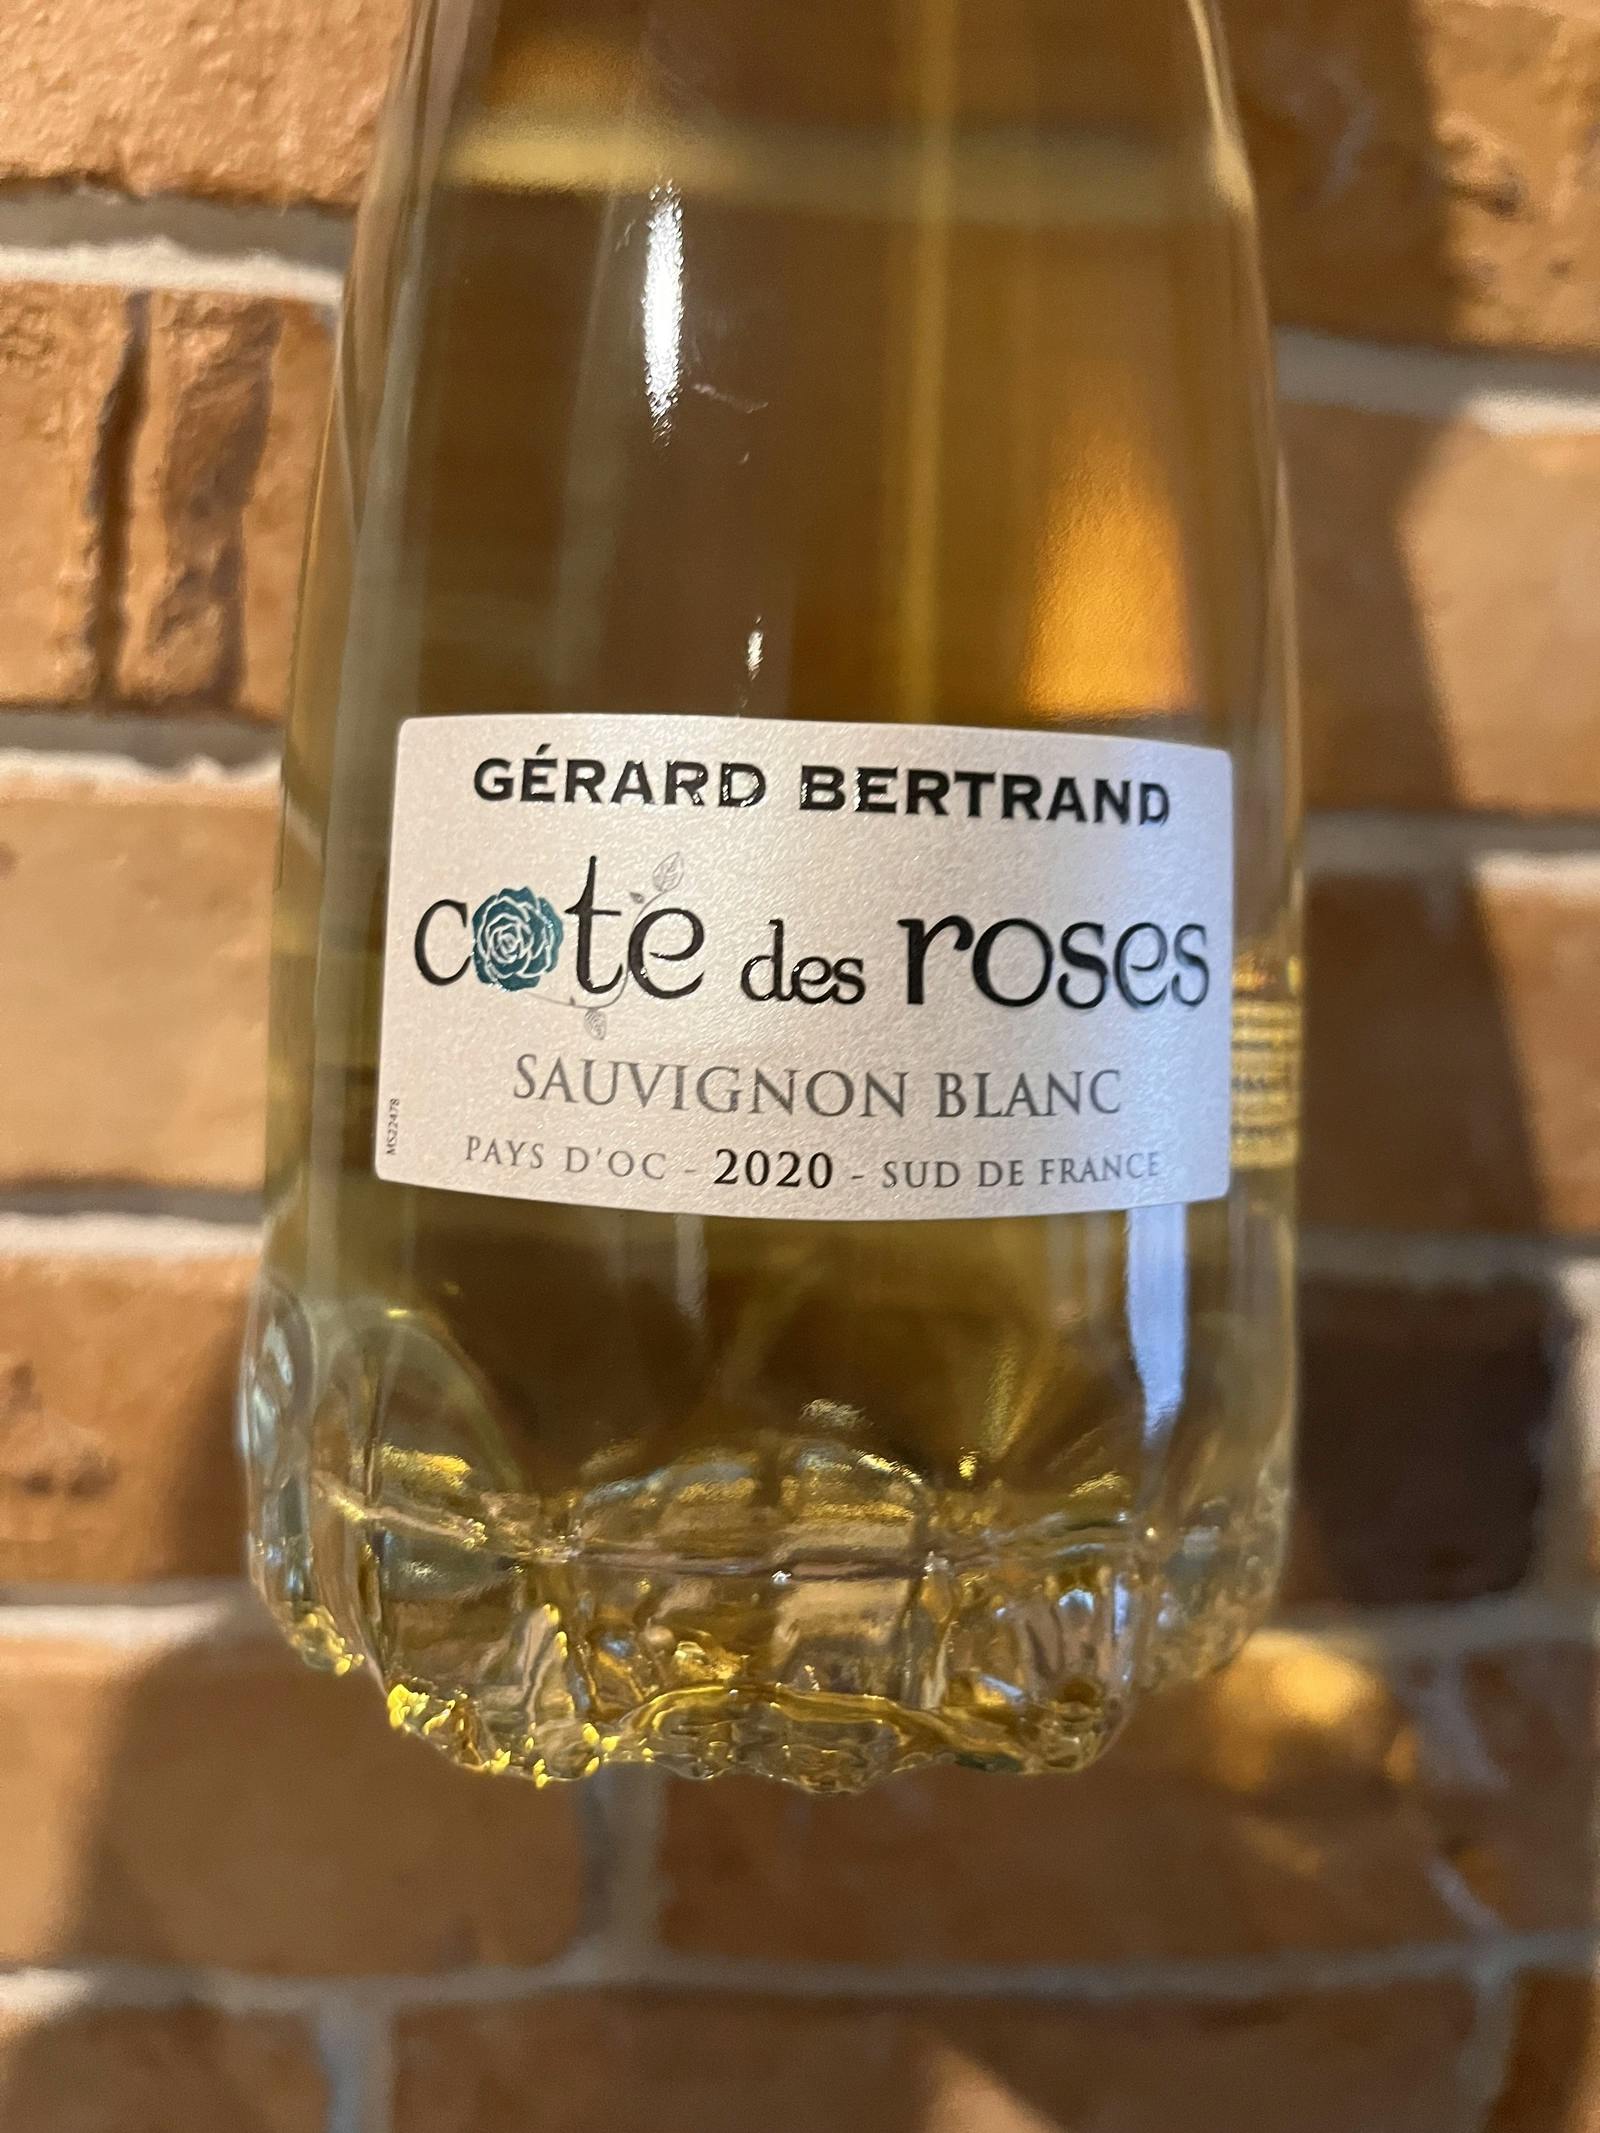 Gérard Bertrand Cote des Roses Sauvignon Blanc 2020